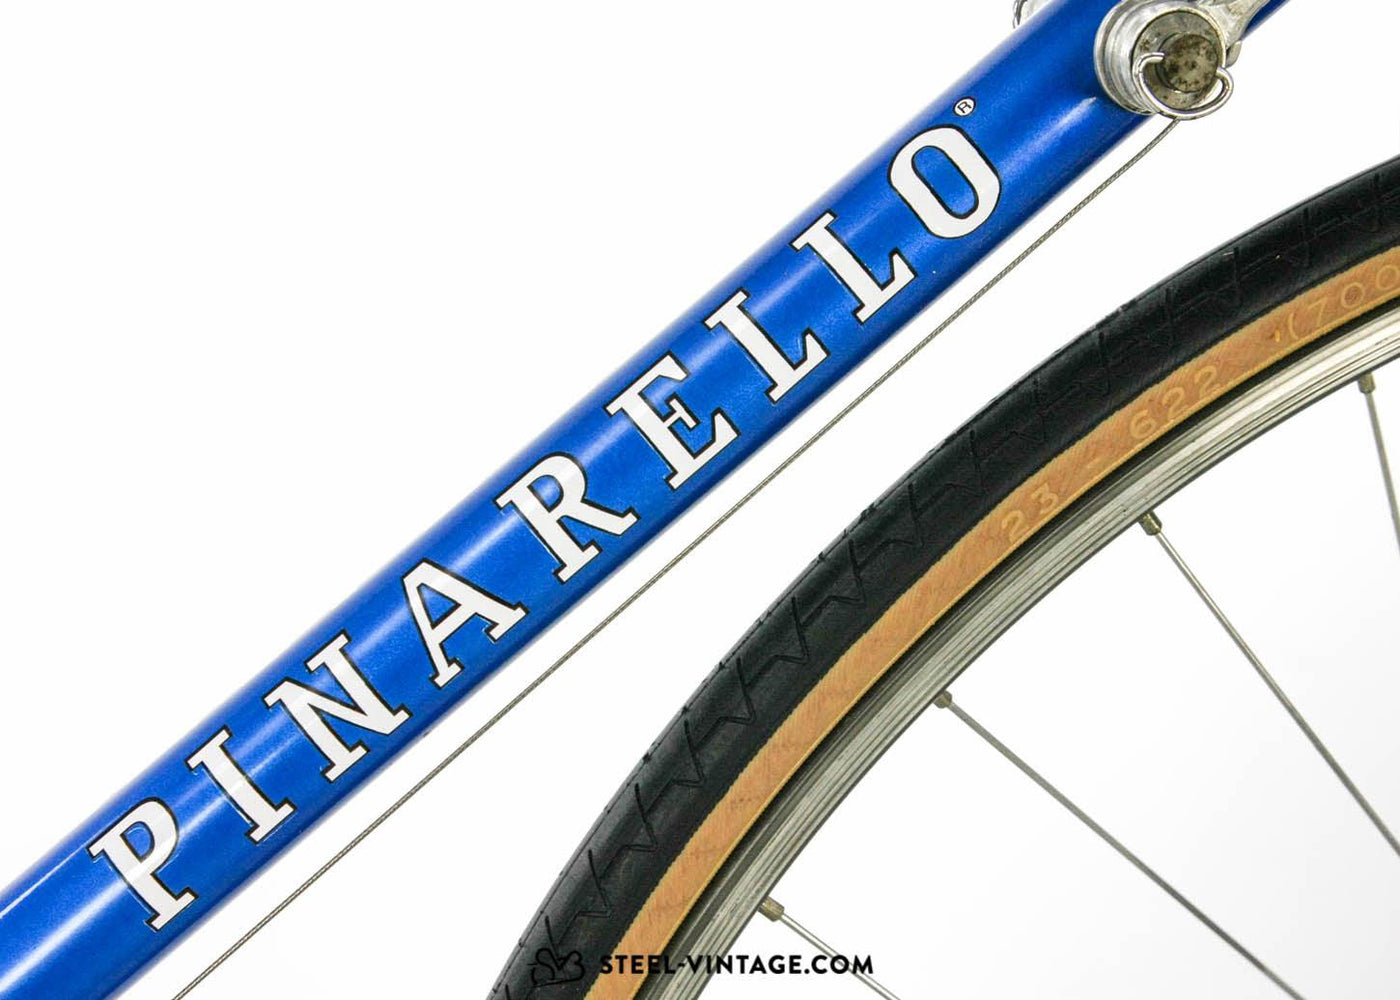 Pinarello Treviso Super Record Special 1982 - Steel Vintage Bikes